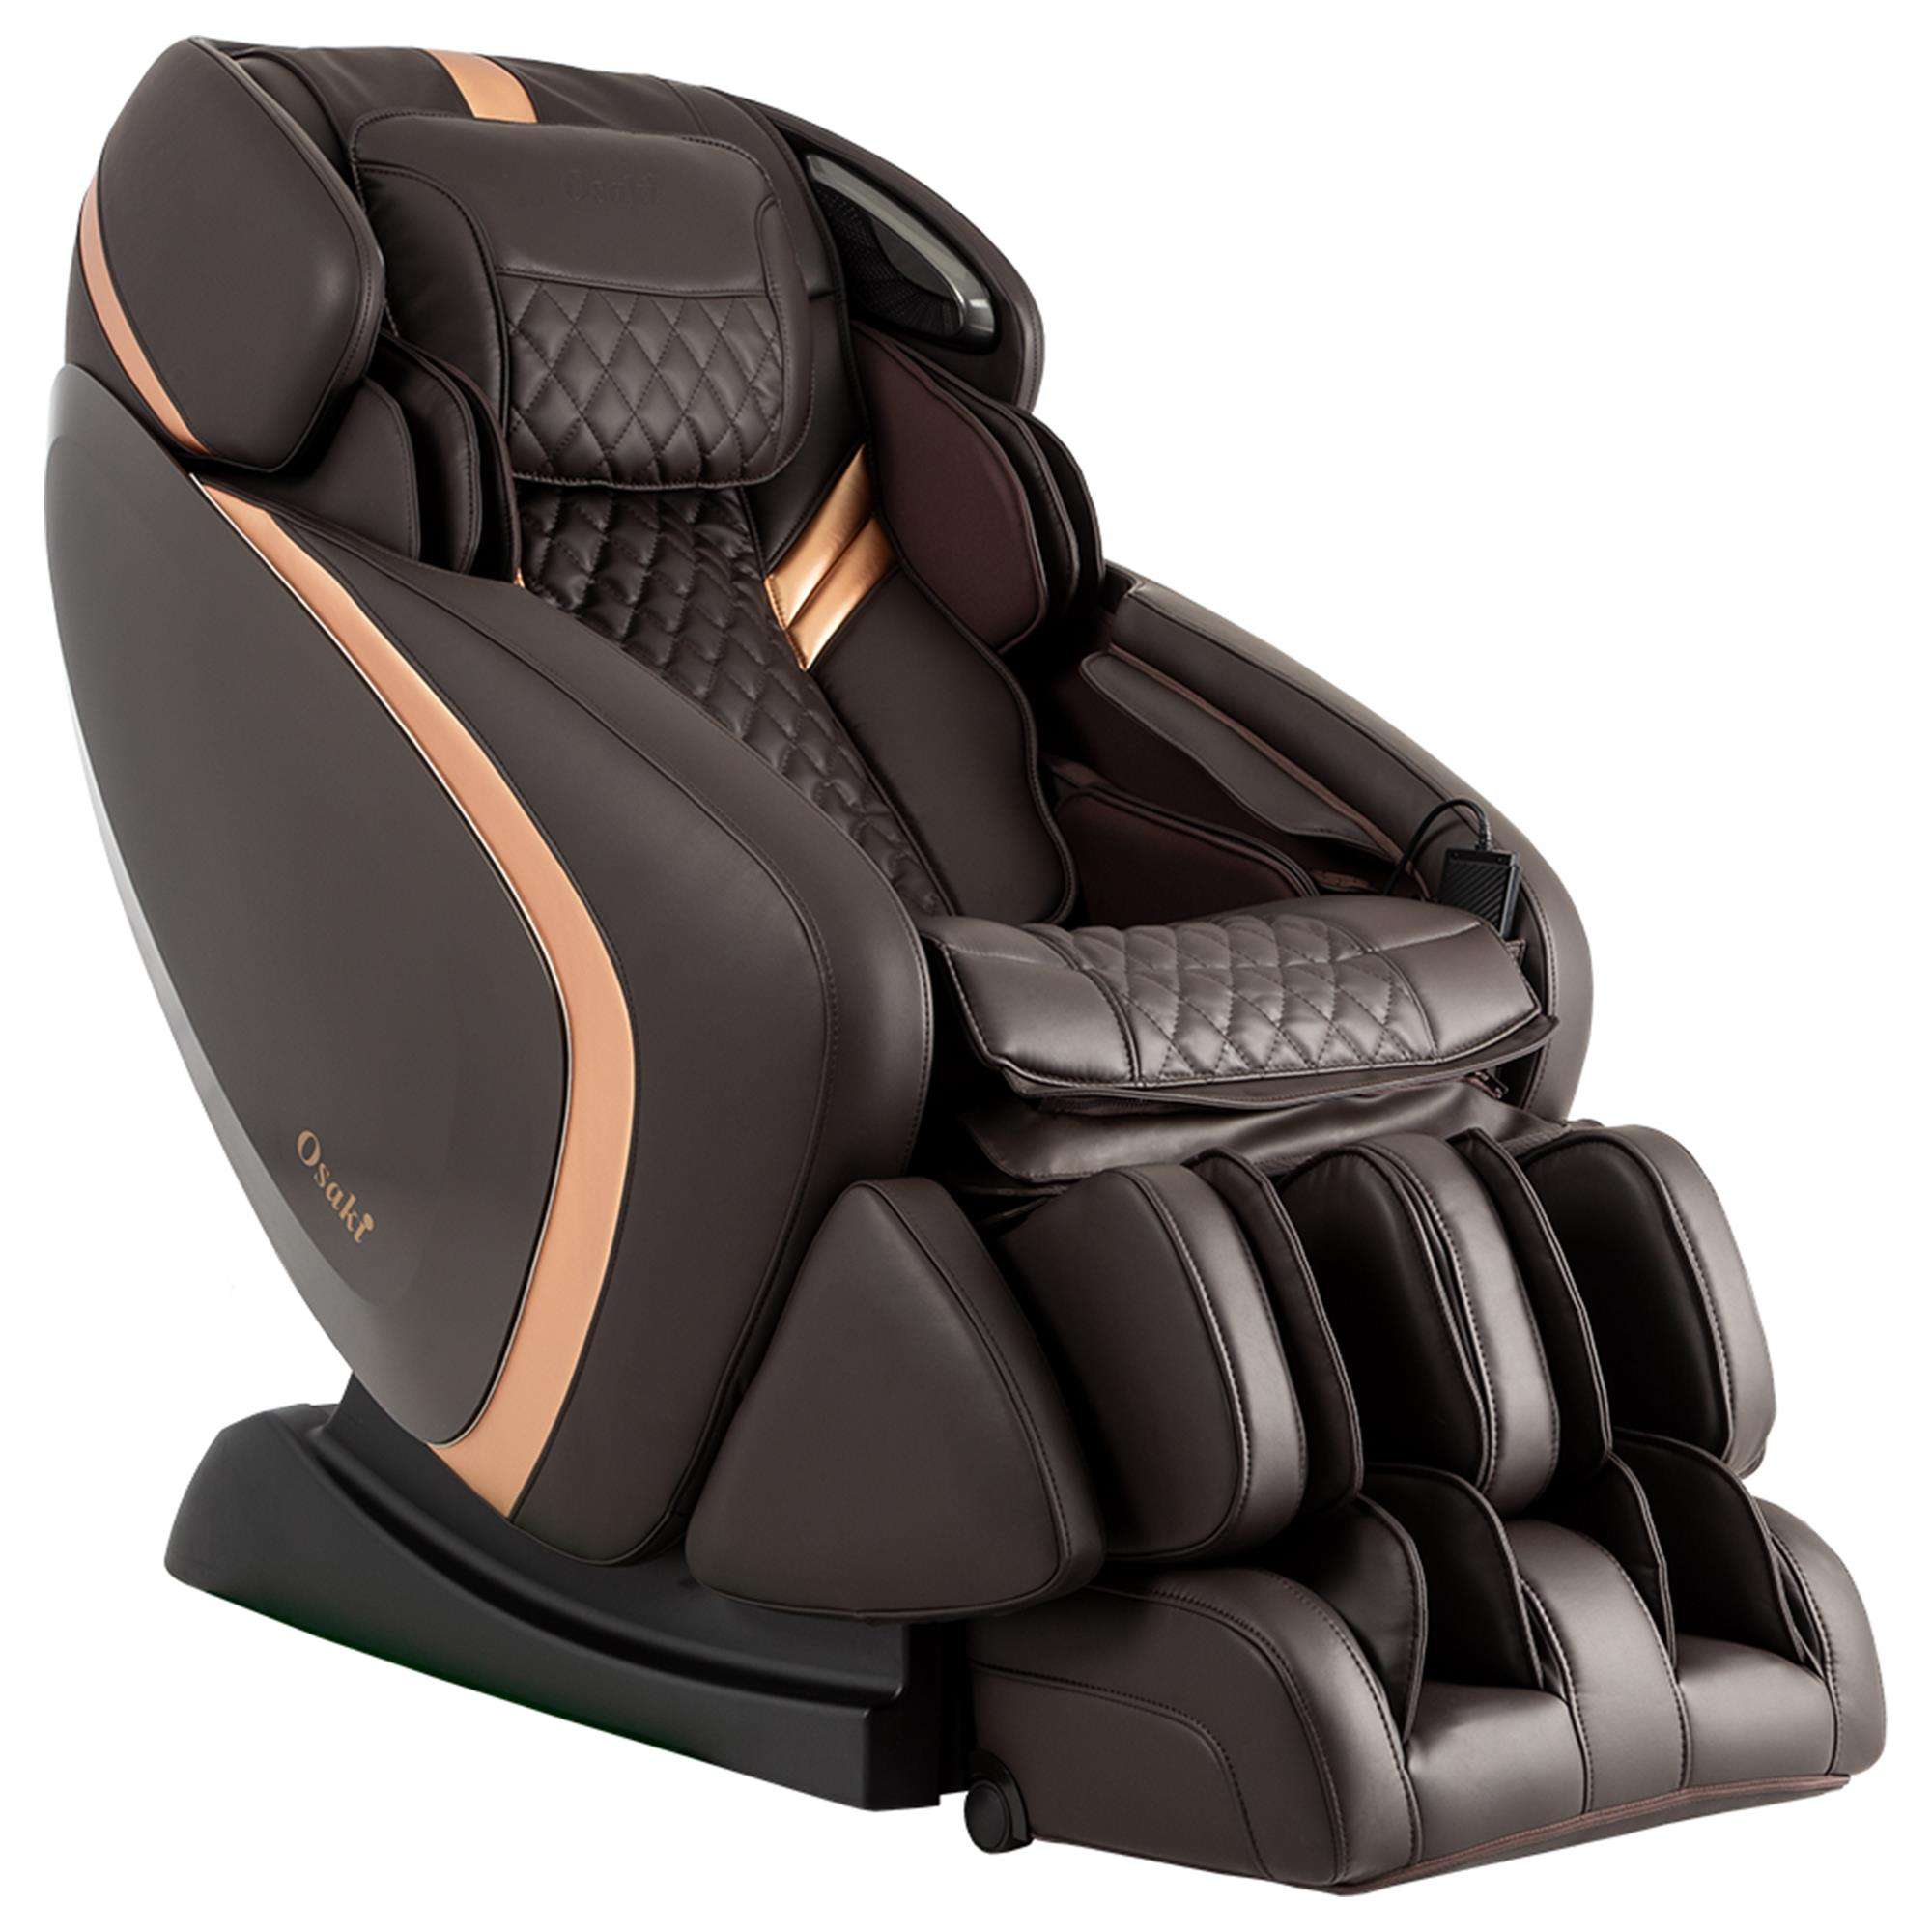 Osaki 3D Pro Admiral Massage Chair in Brown